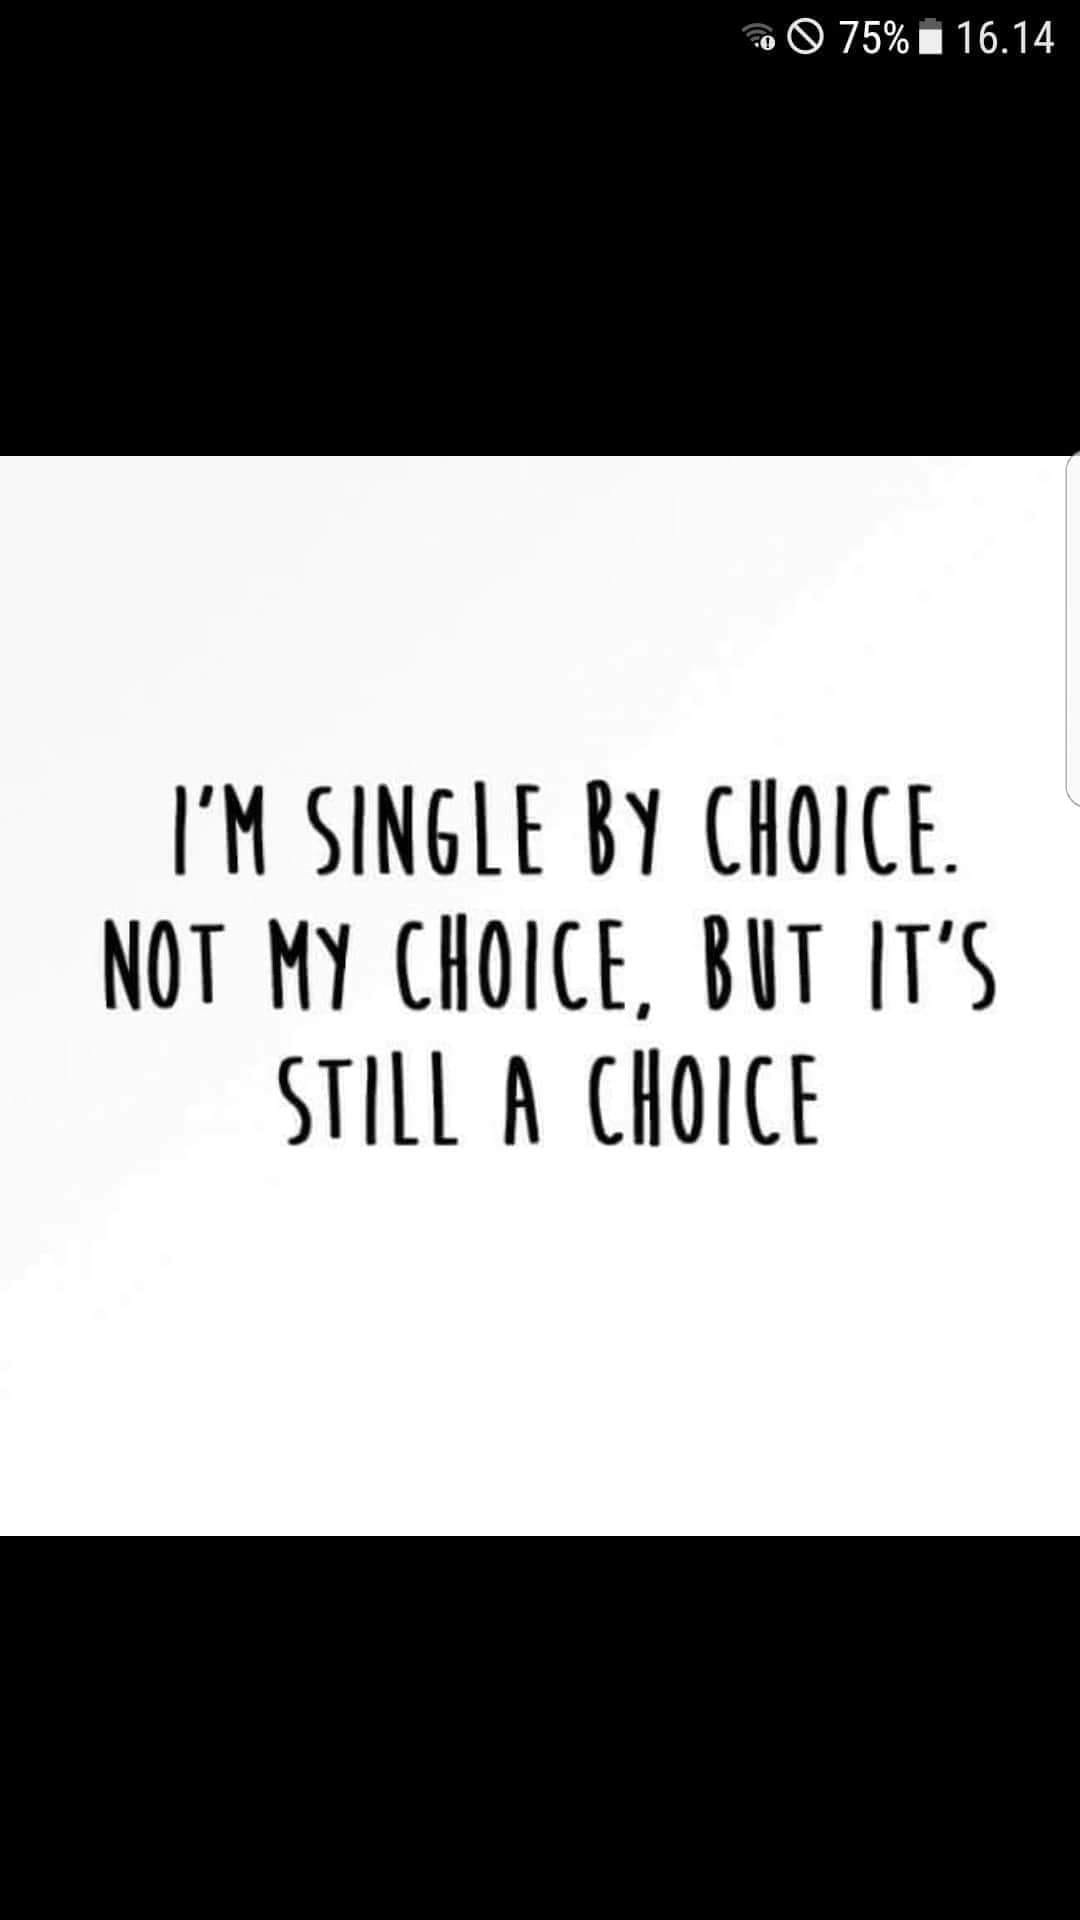 Im still single by choice - Not my choice